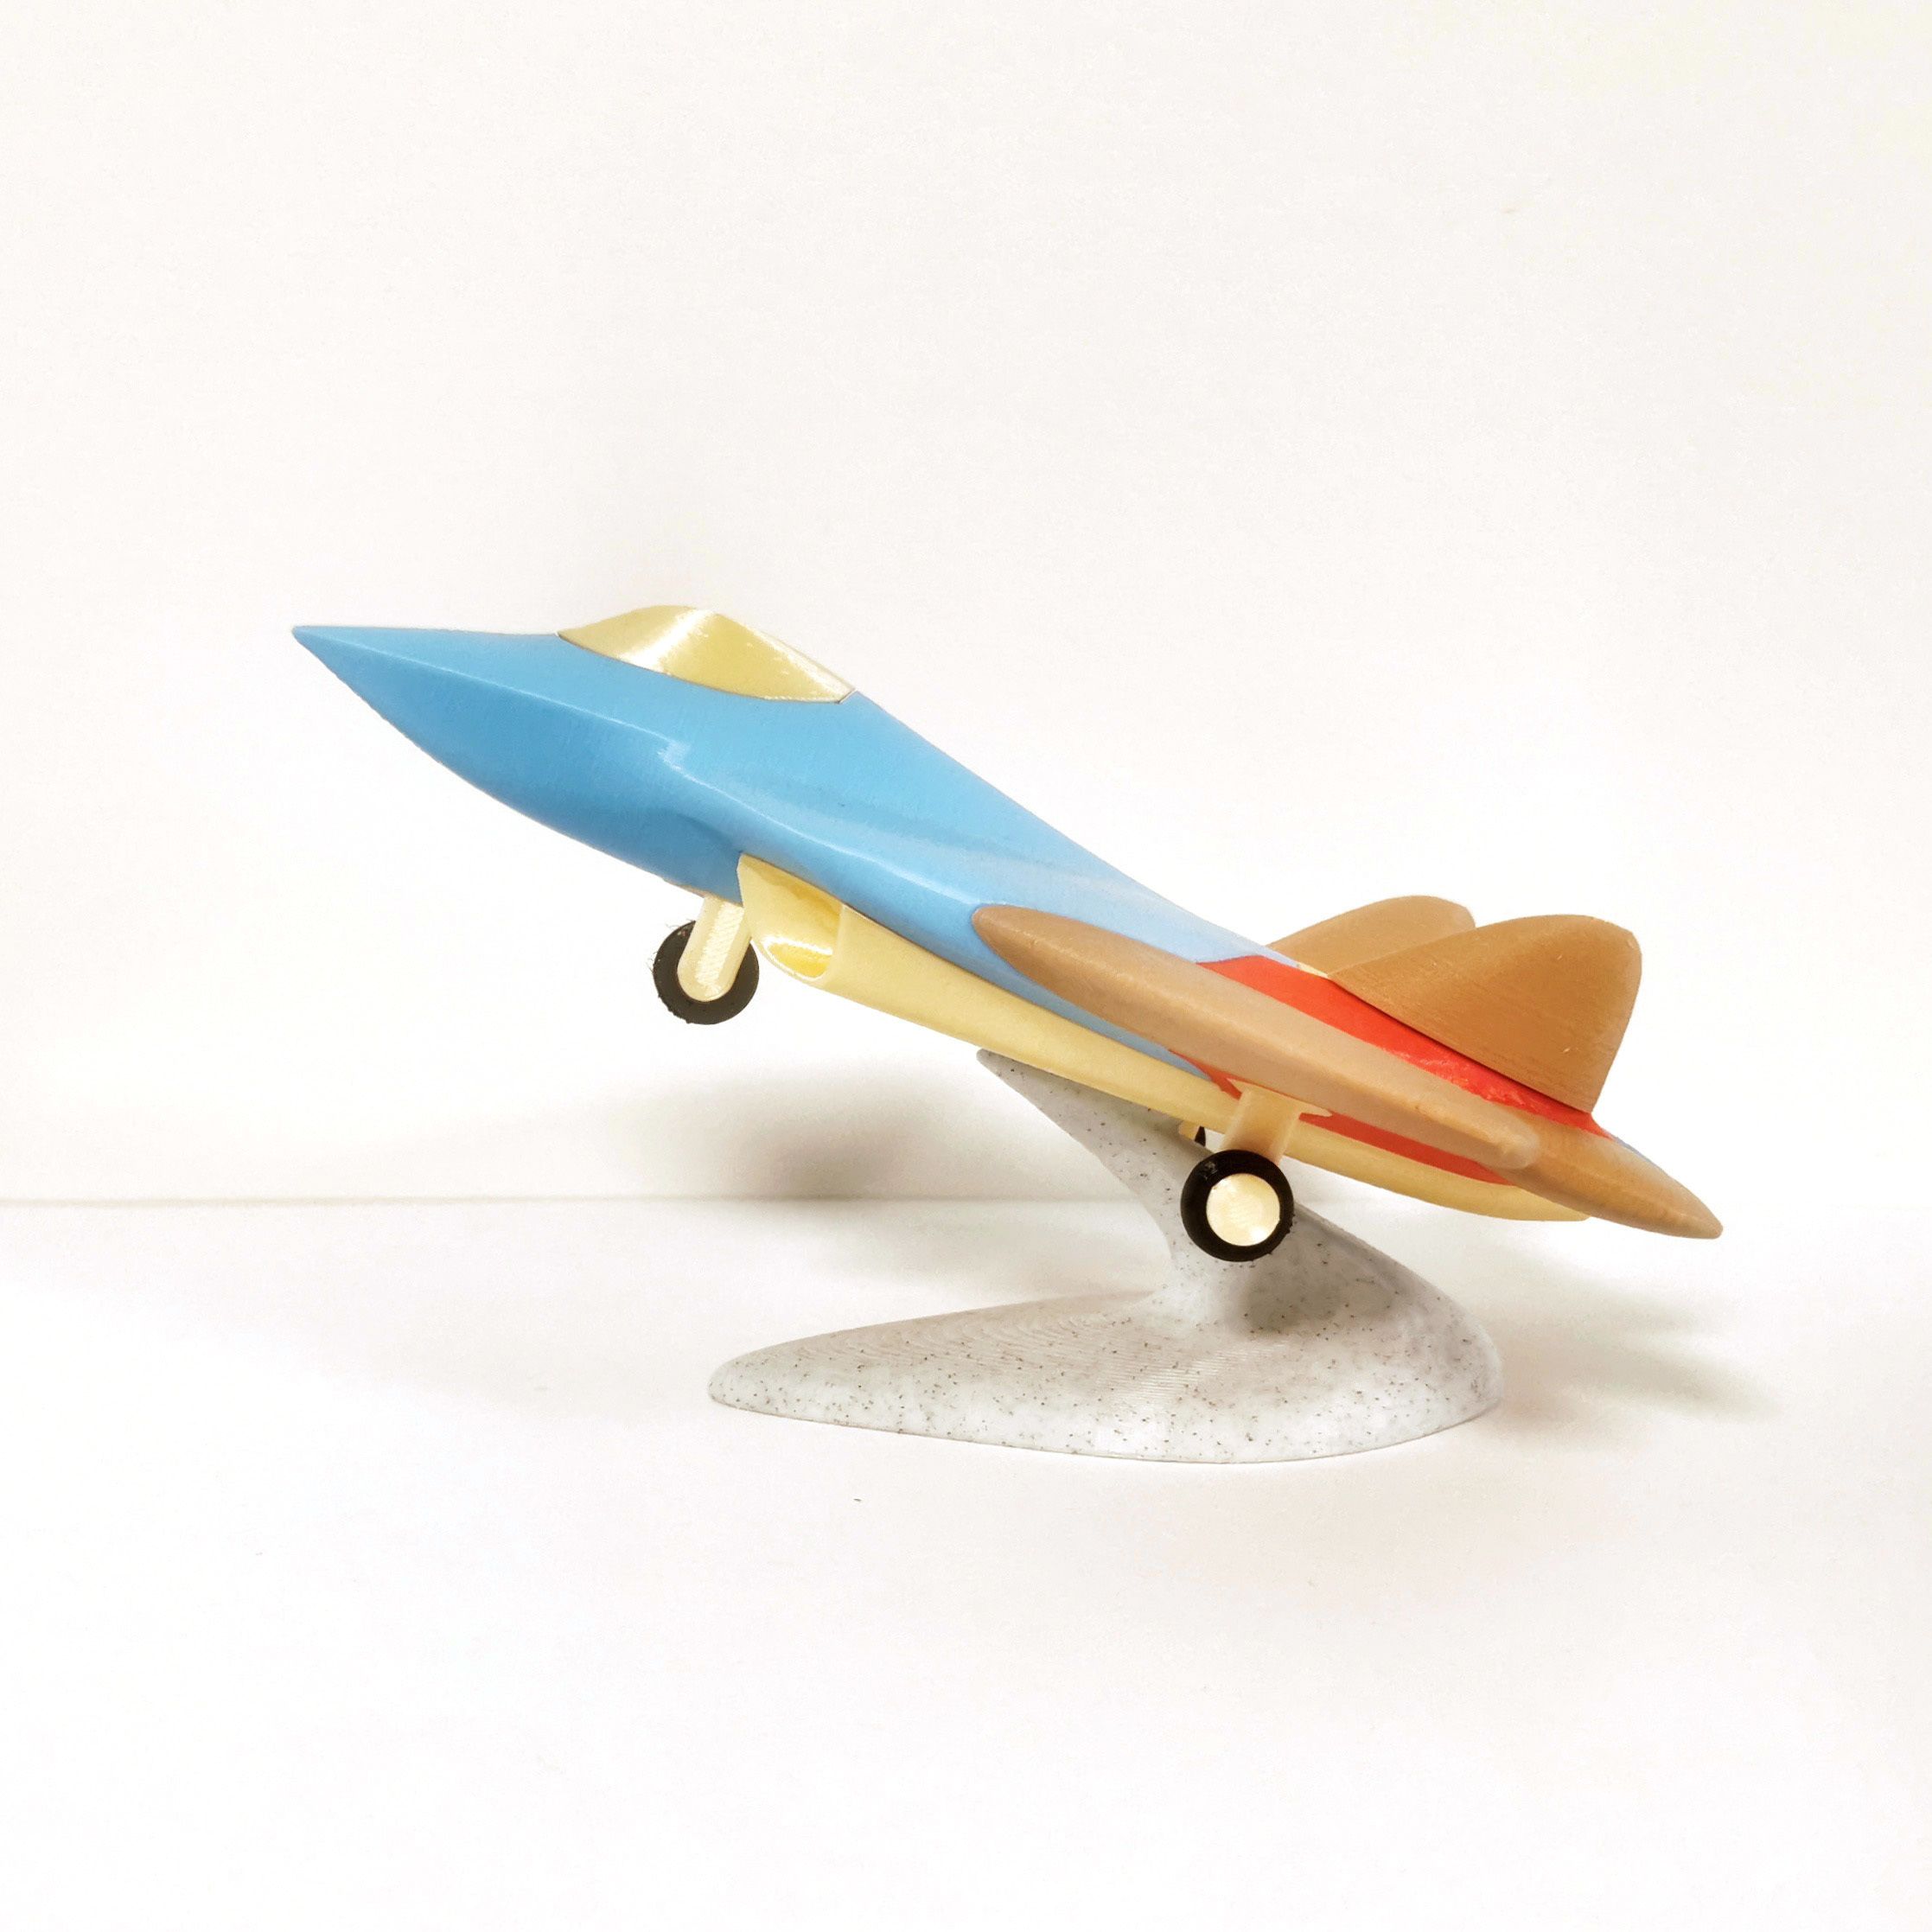 IMG_20200809_103656-01.jpeg Download STL file Fighter Jet Toy Puzzle - RU type • 3D printing template, HeyVye